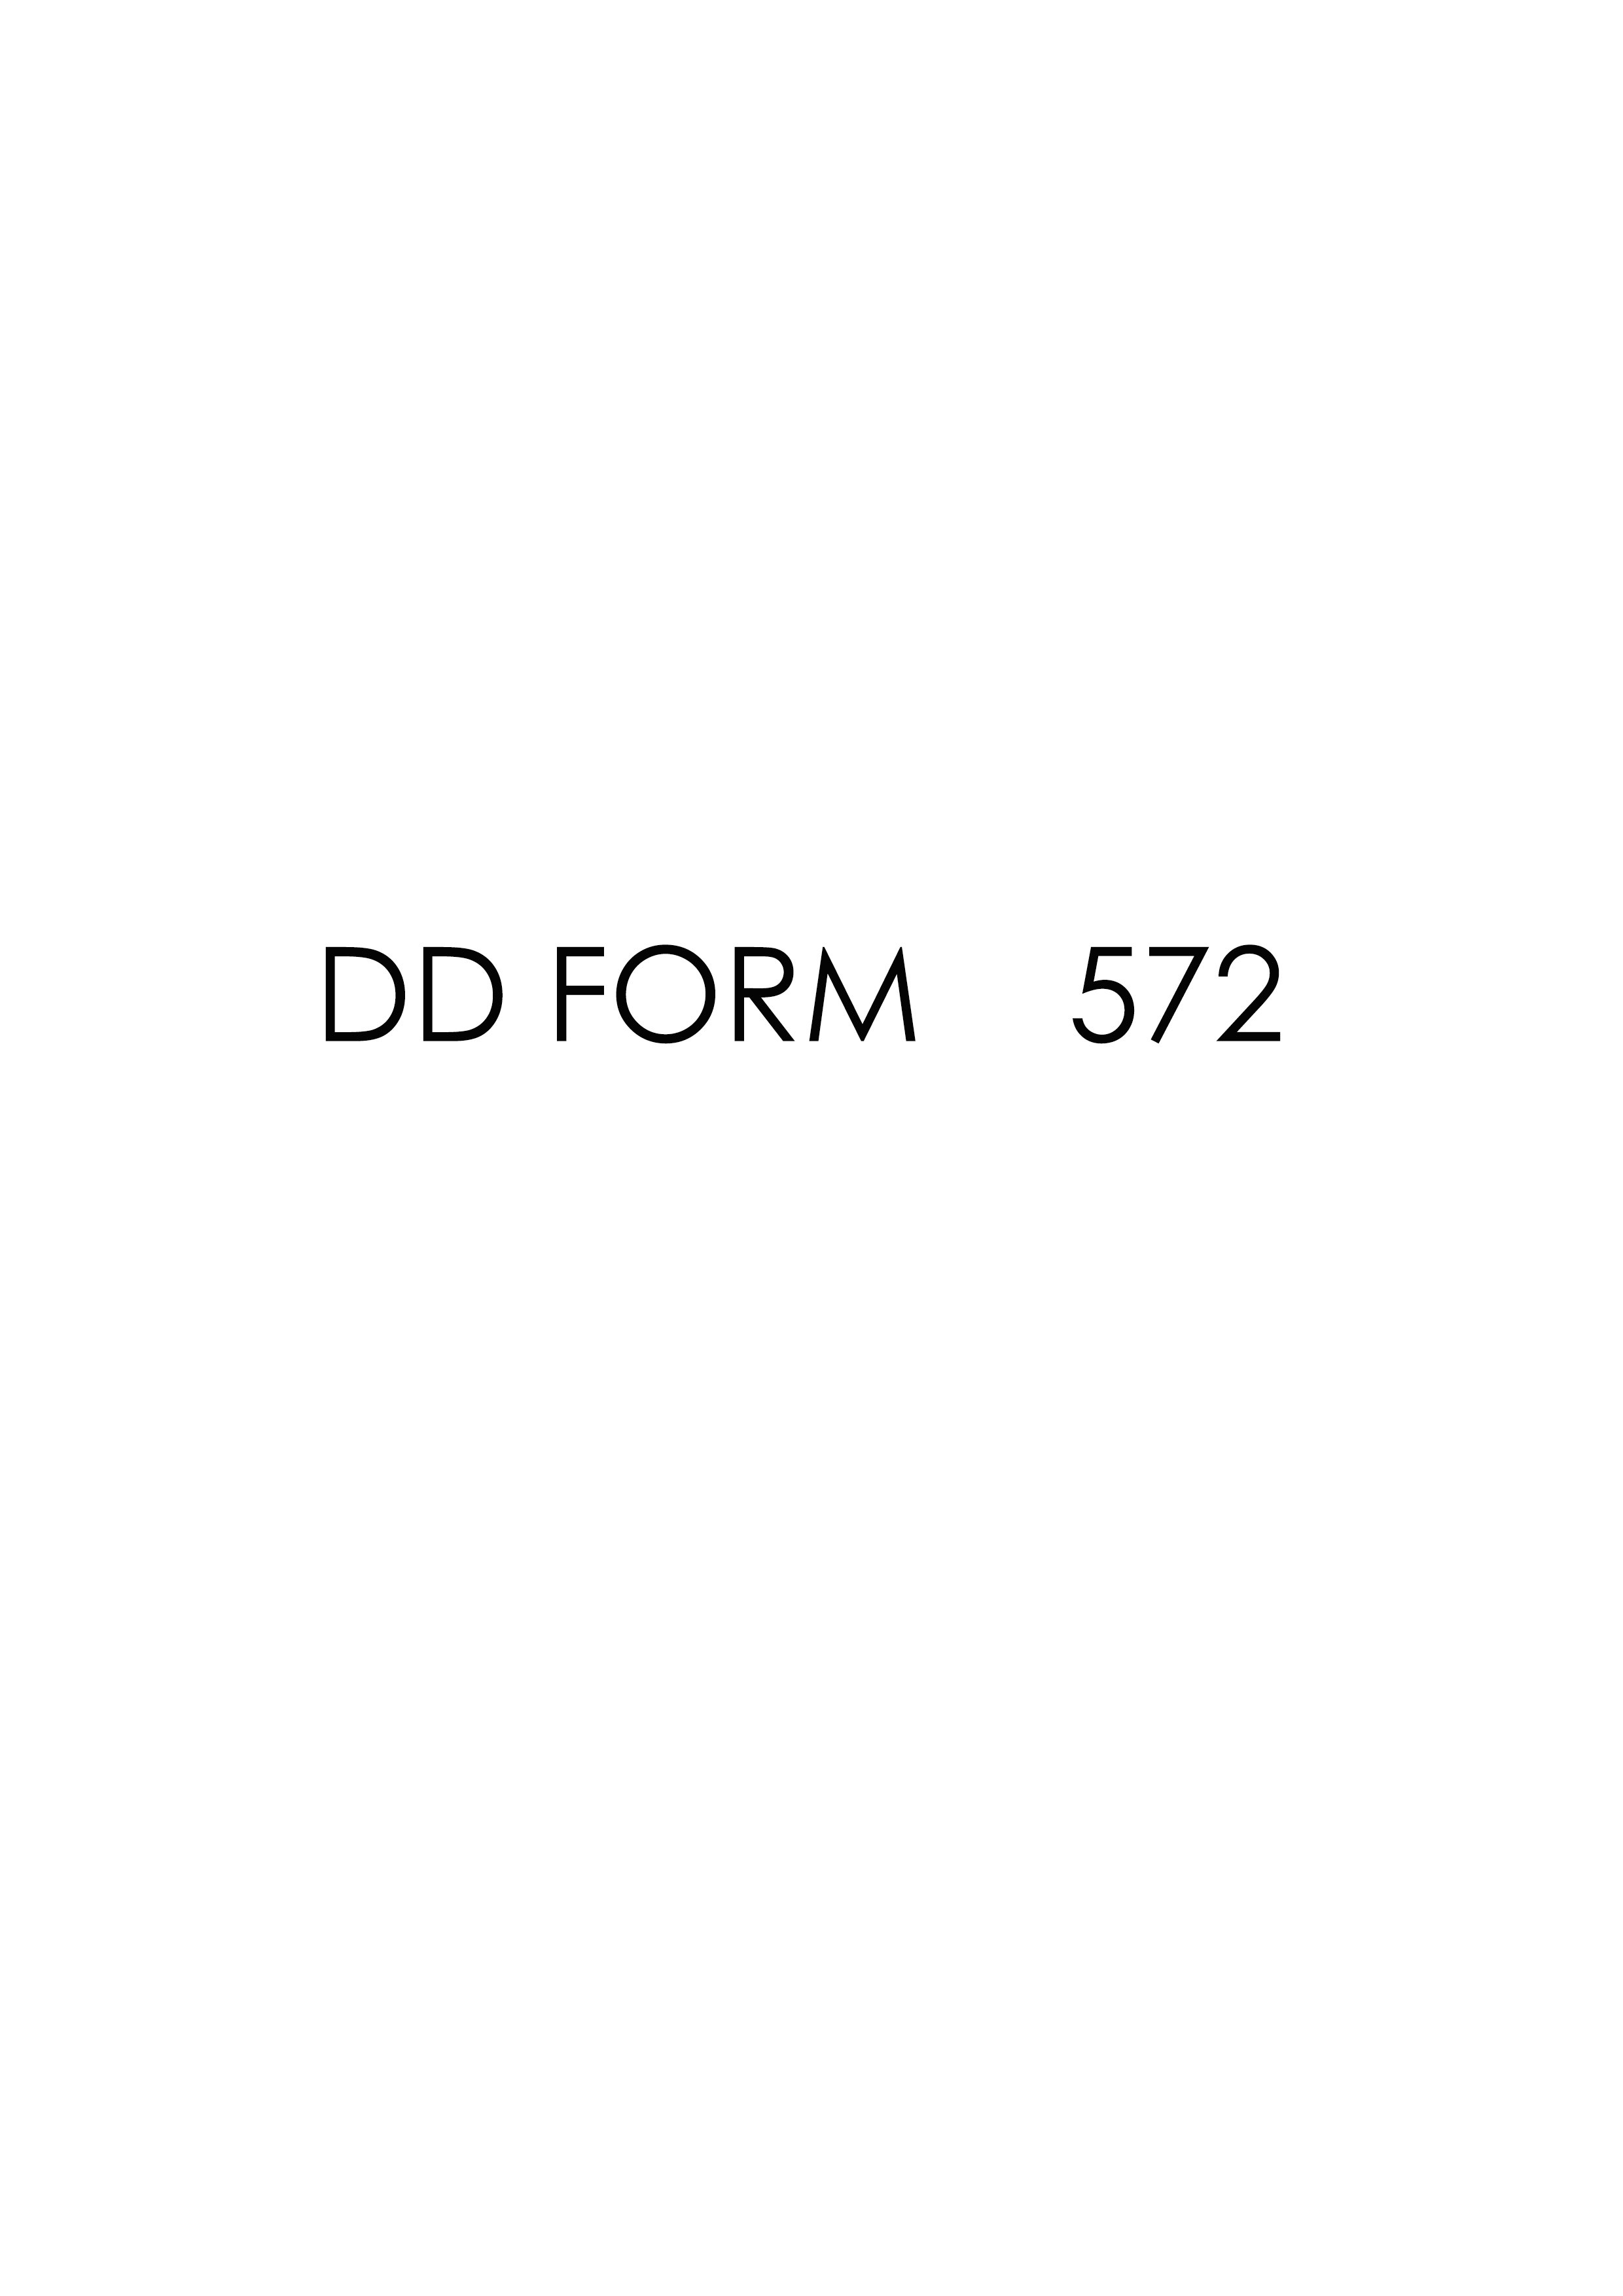 Download dd form 572